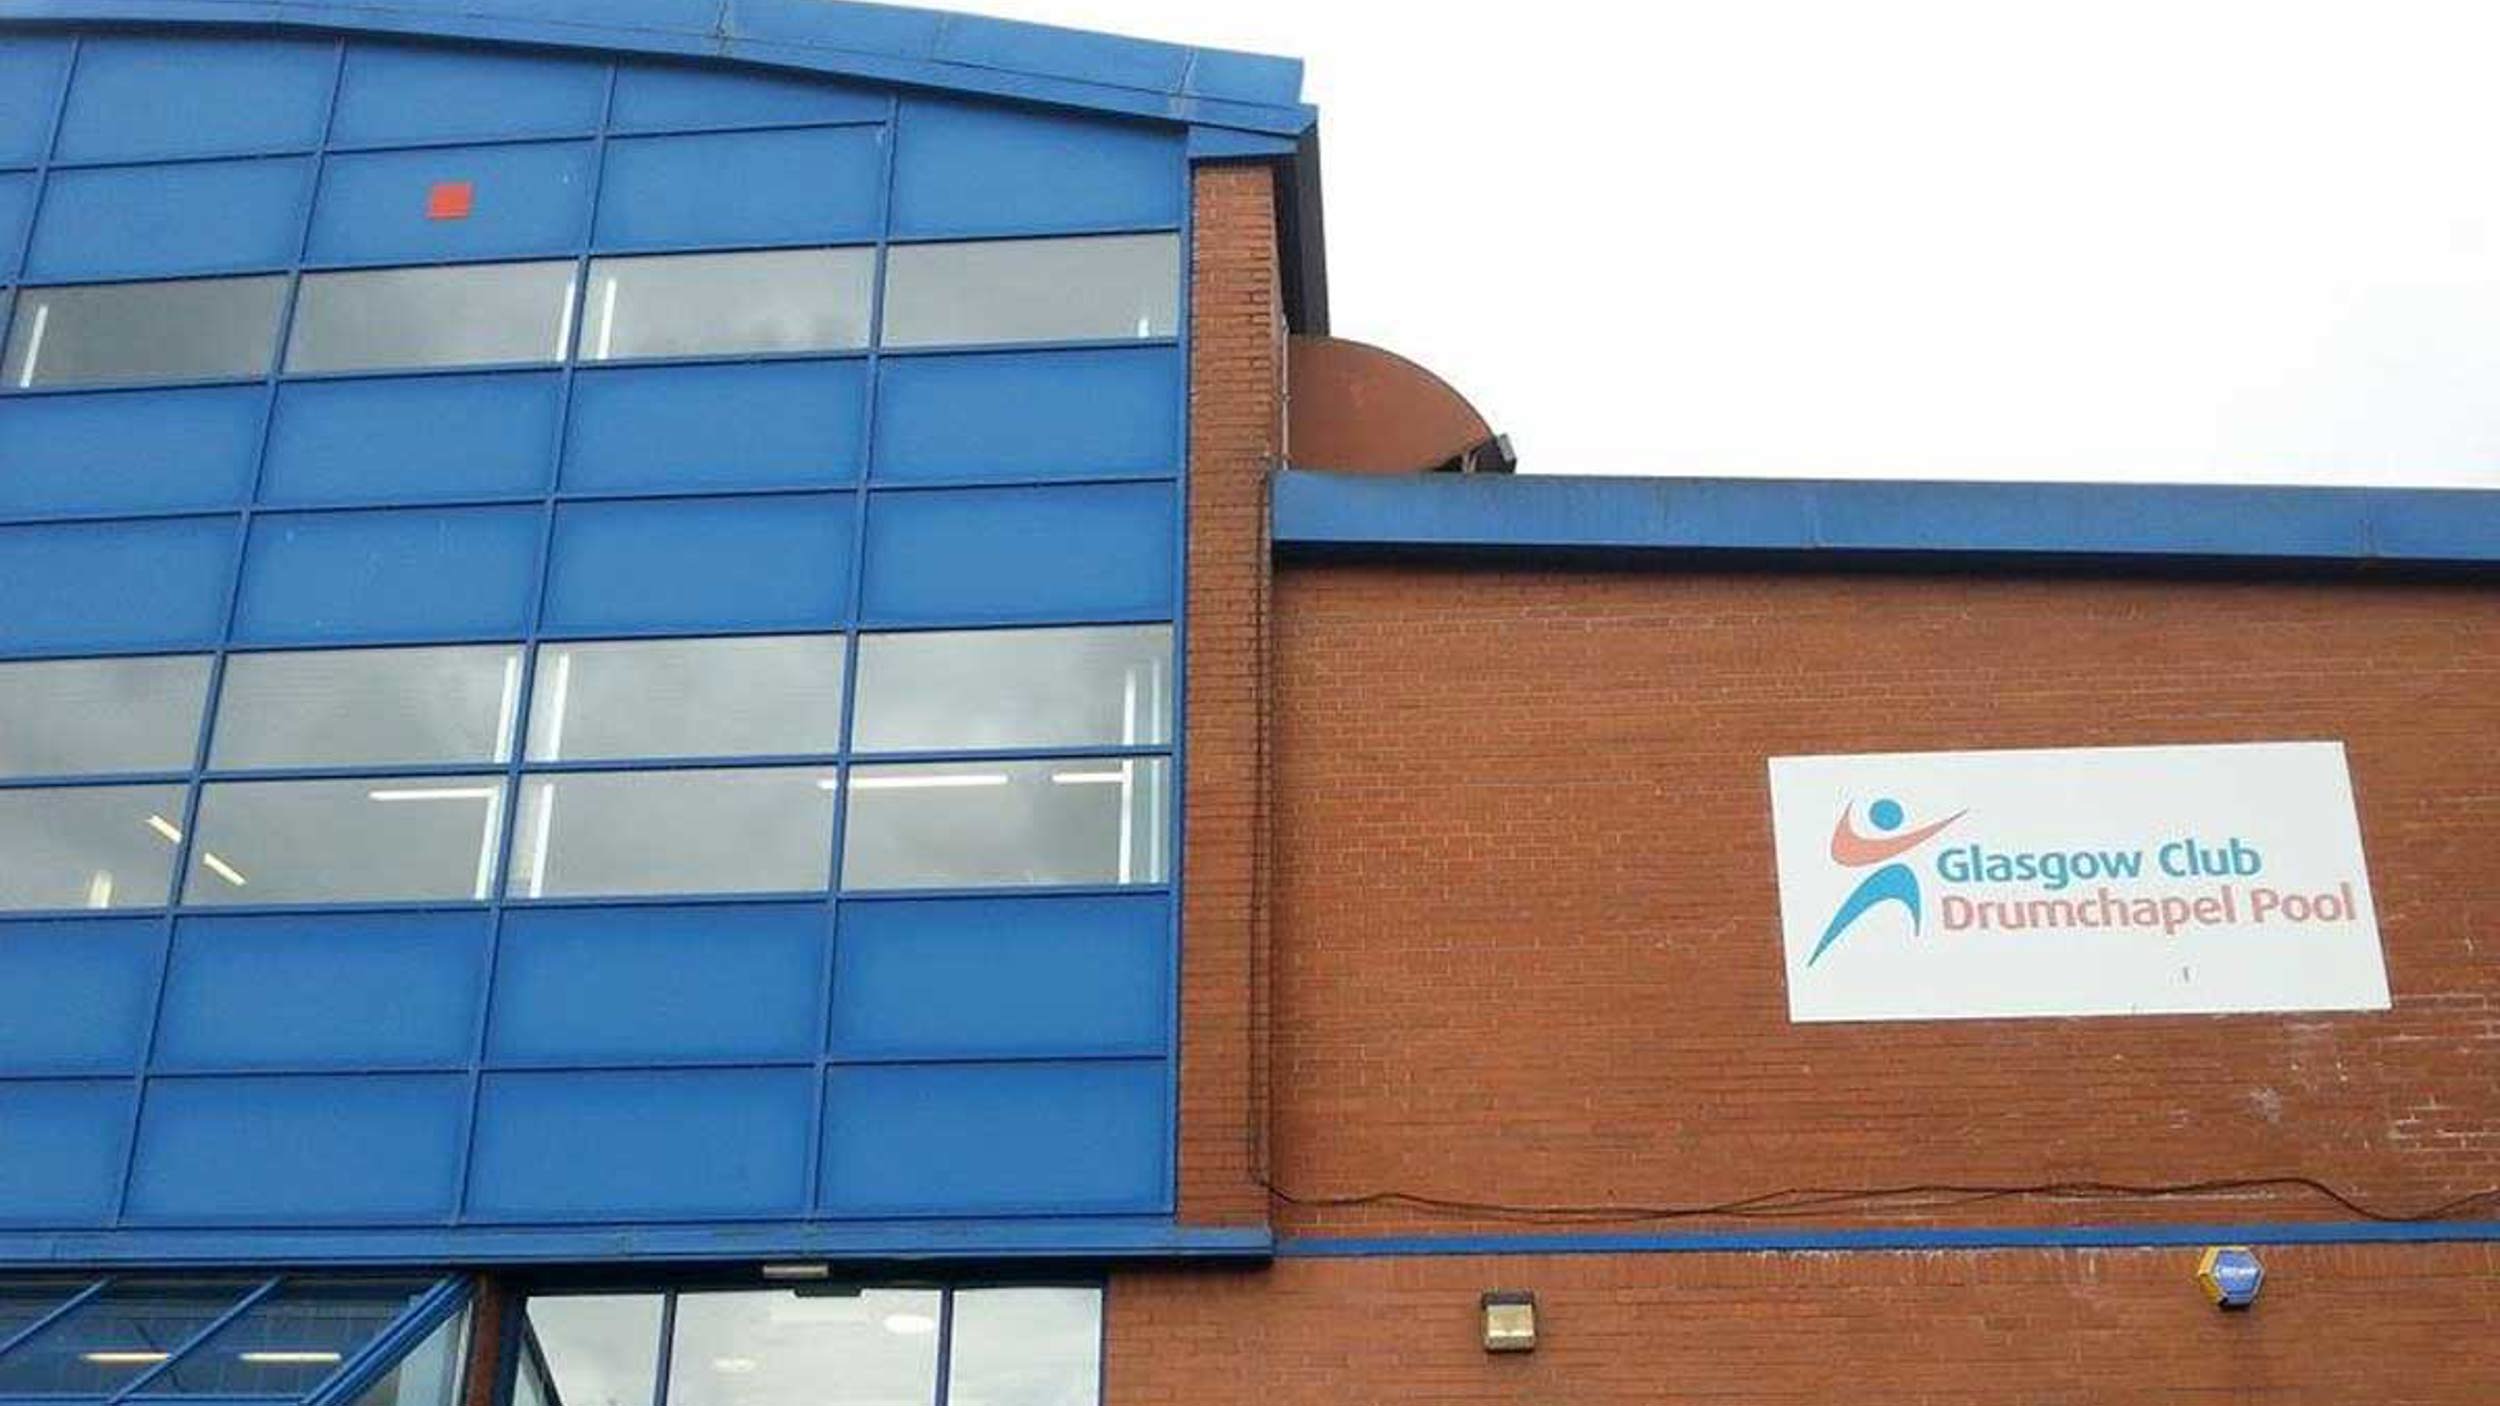 Exterior shot of Glasgow Club Drumchapel Pool showing logo on building 